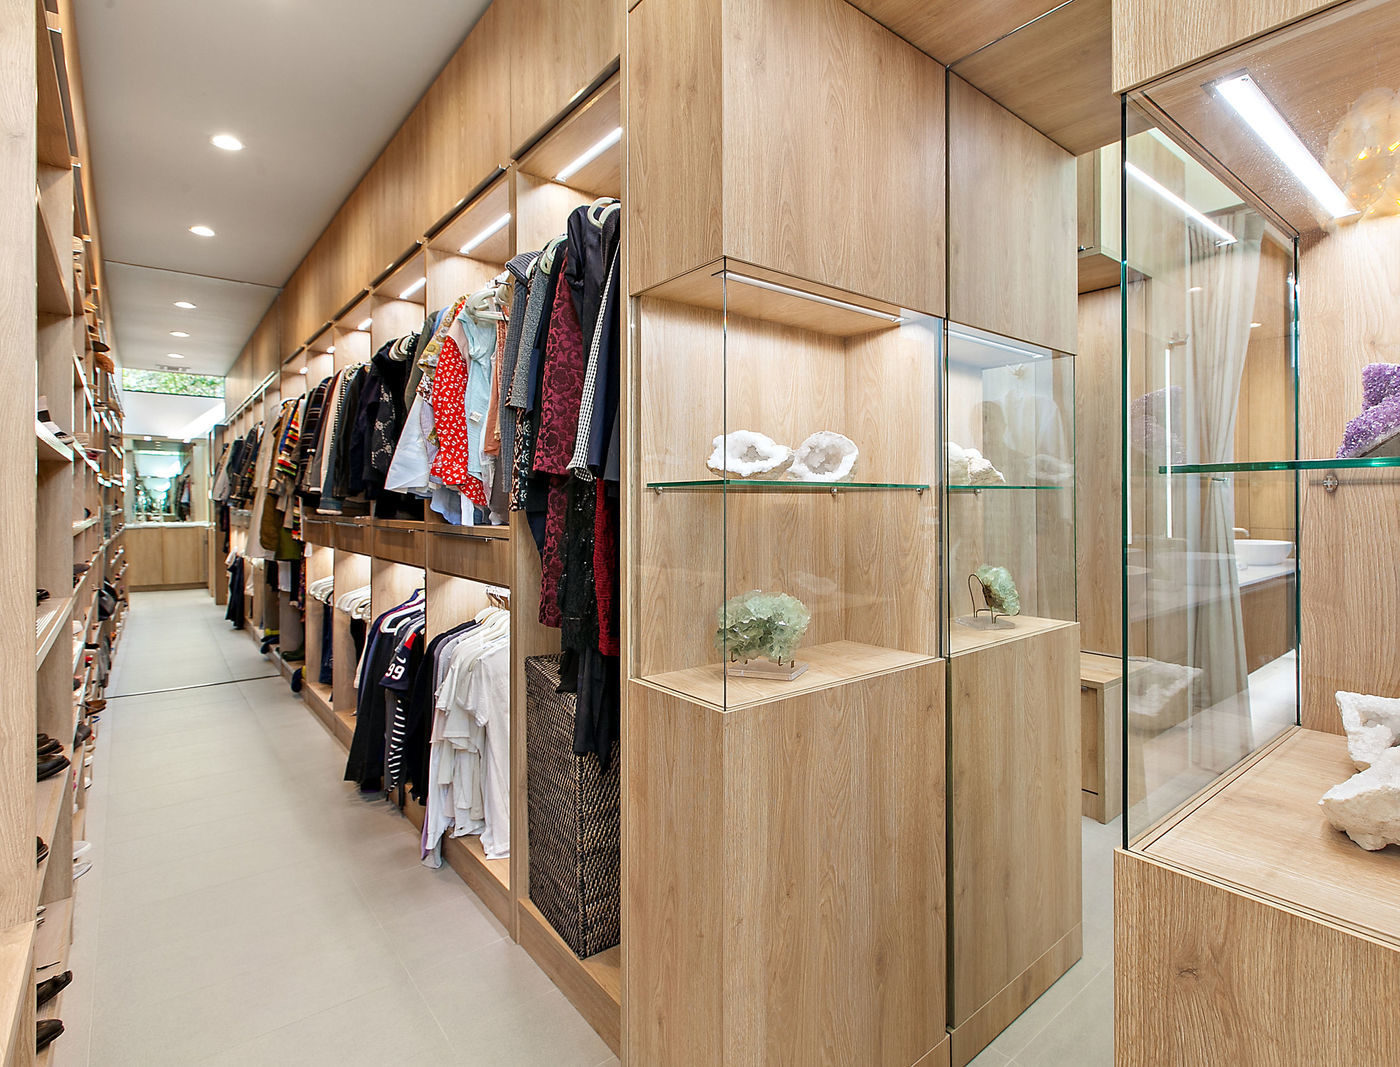 alt="Master walk-in closet with textured oak laminate paneling"